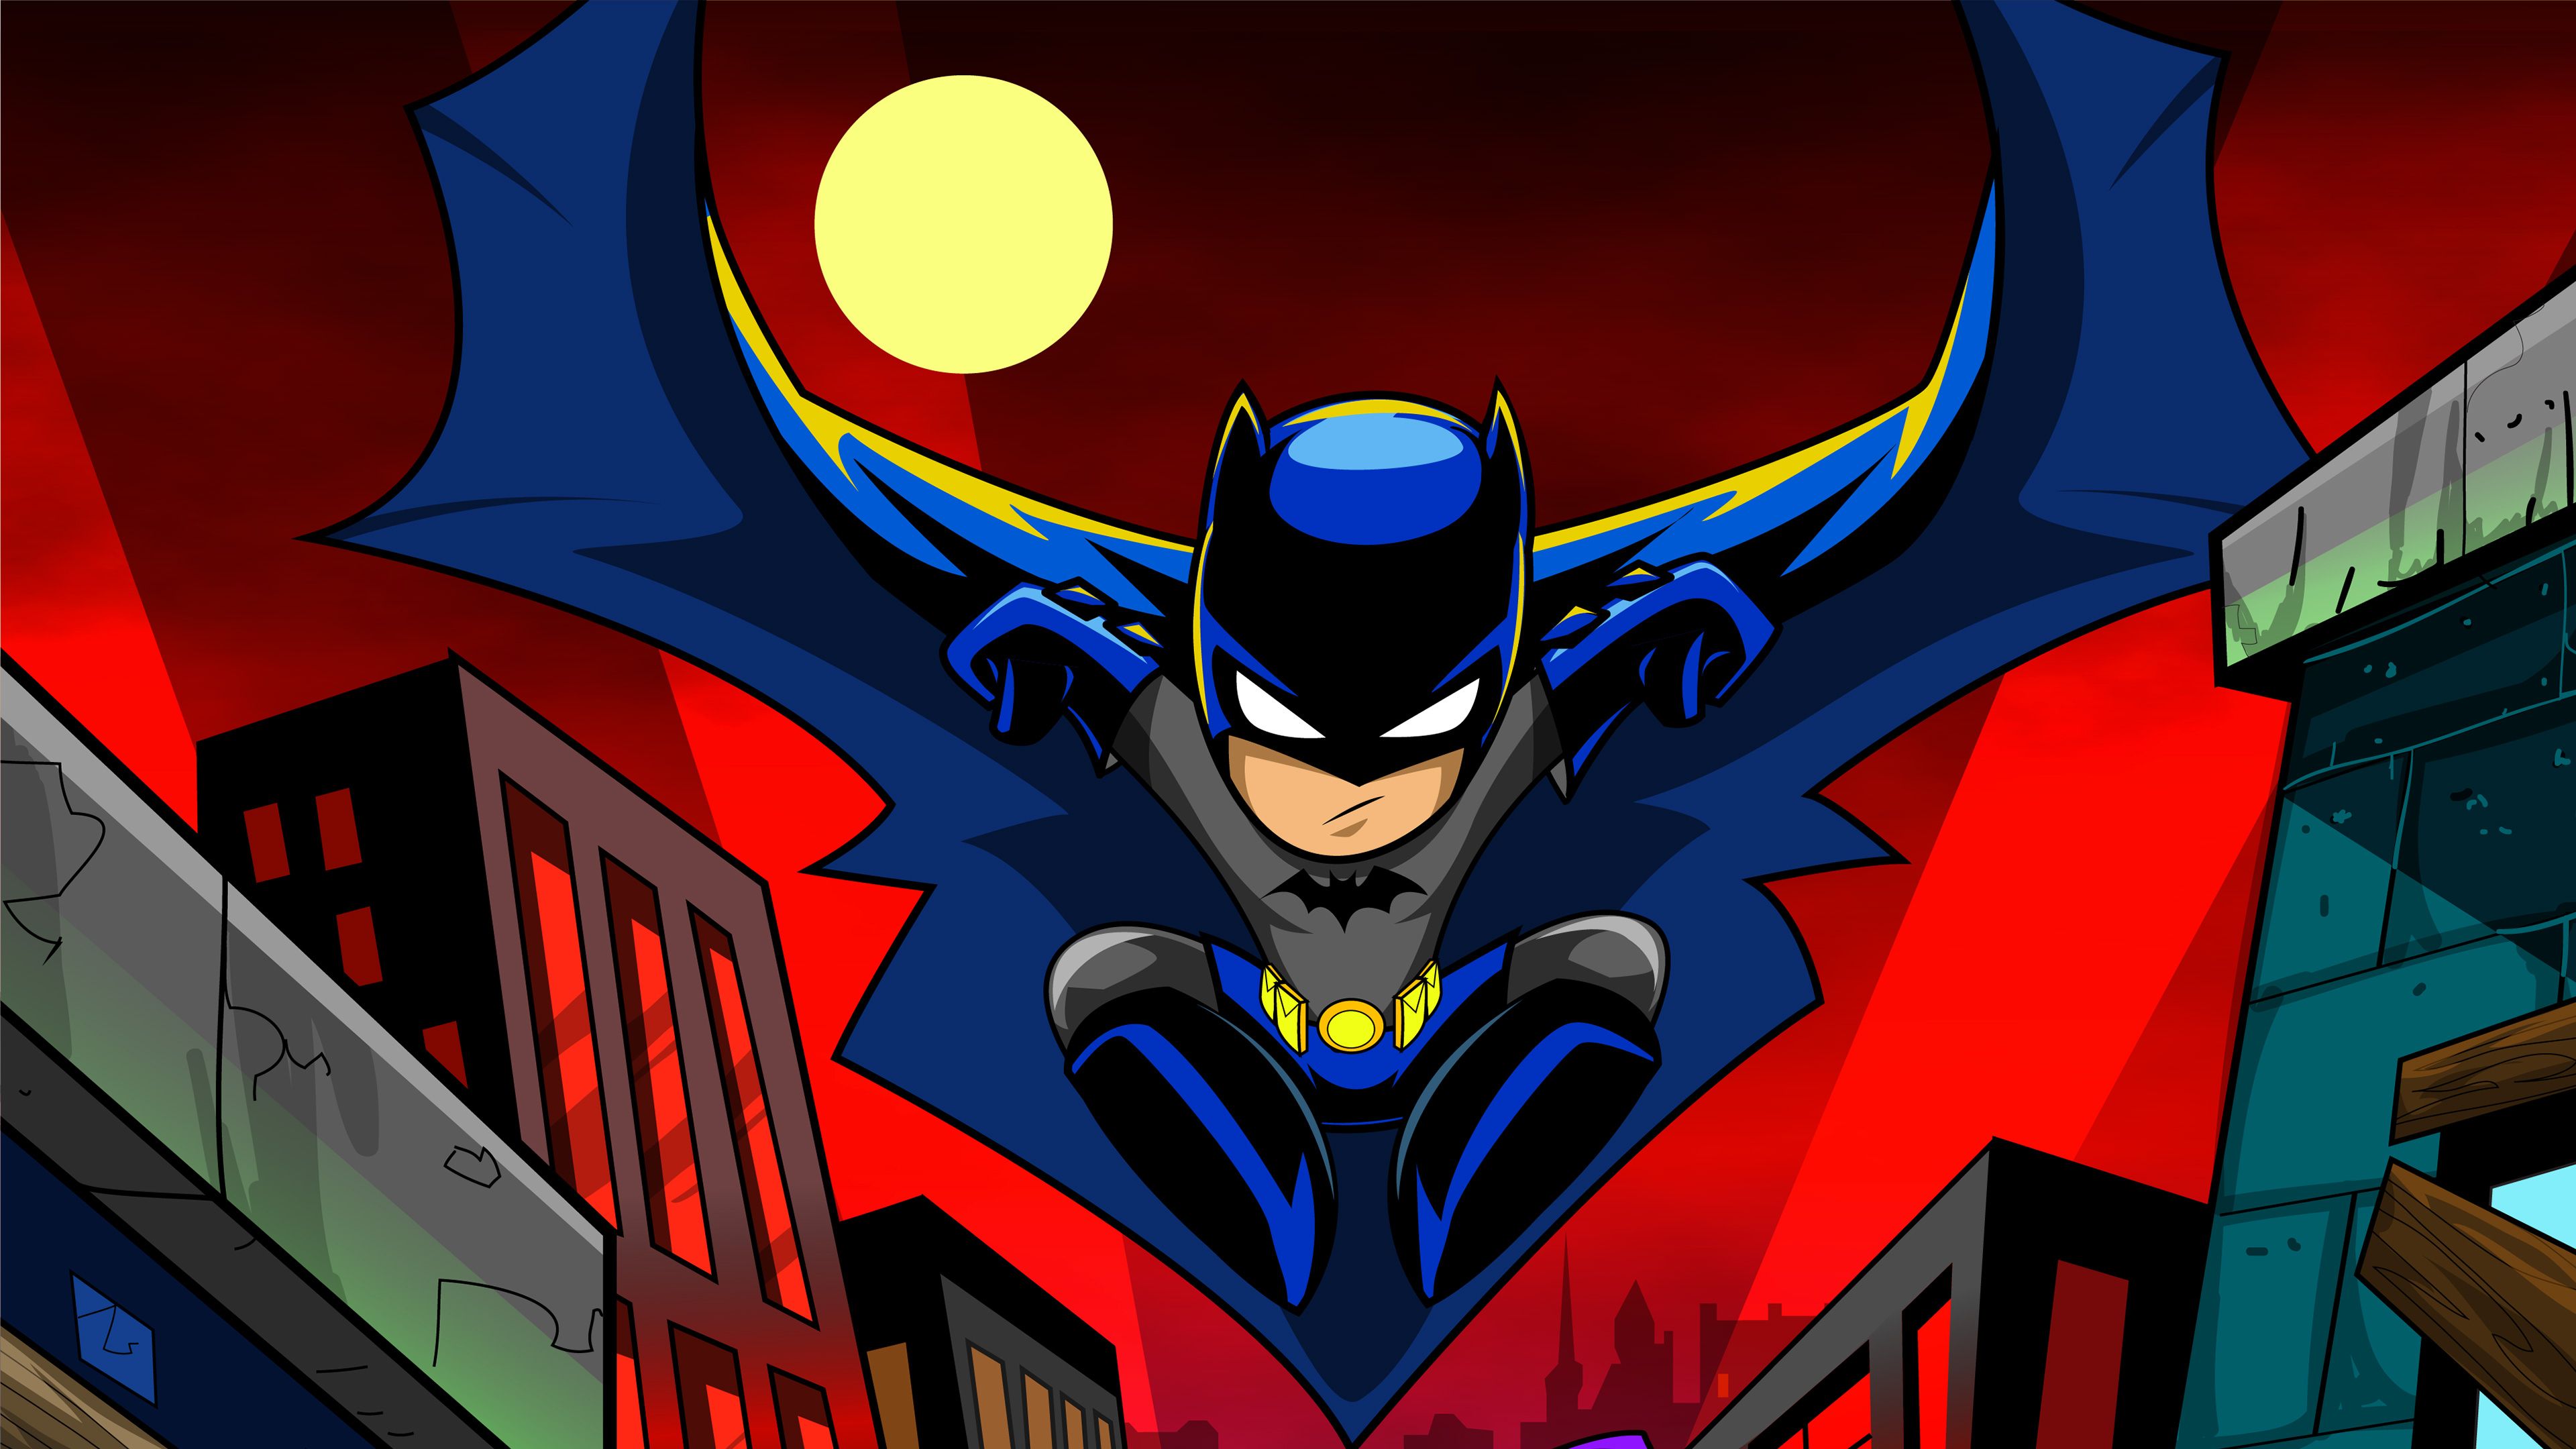 Batman Cartoon Art 4k, HD Superheroes, 4k Wallpaper, Image, Background, Photo and Picture